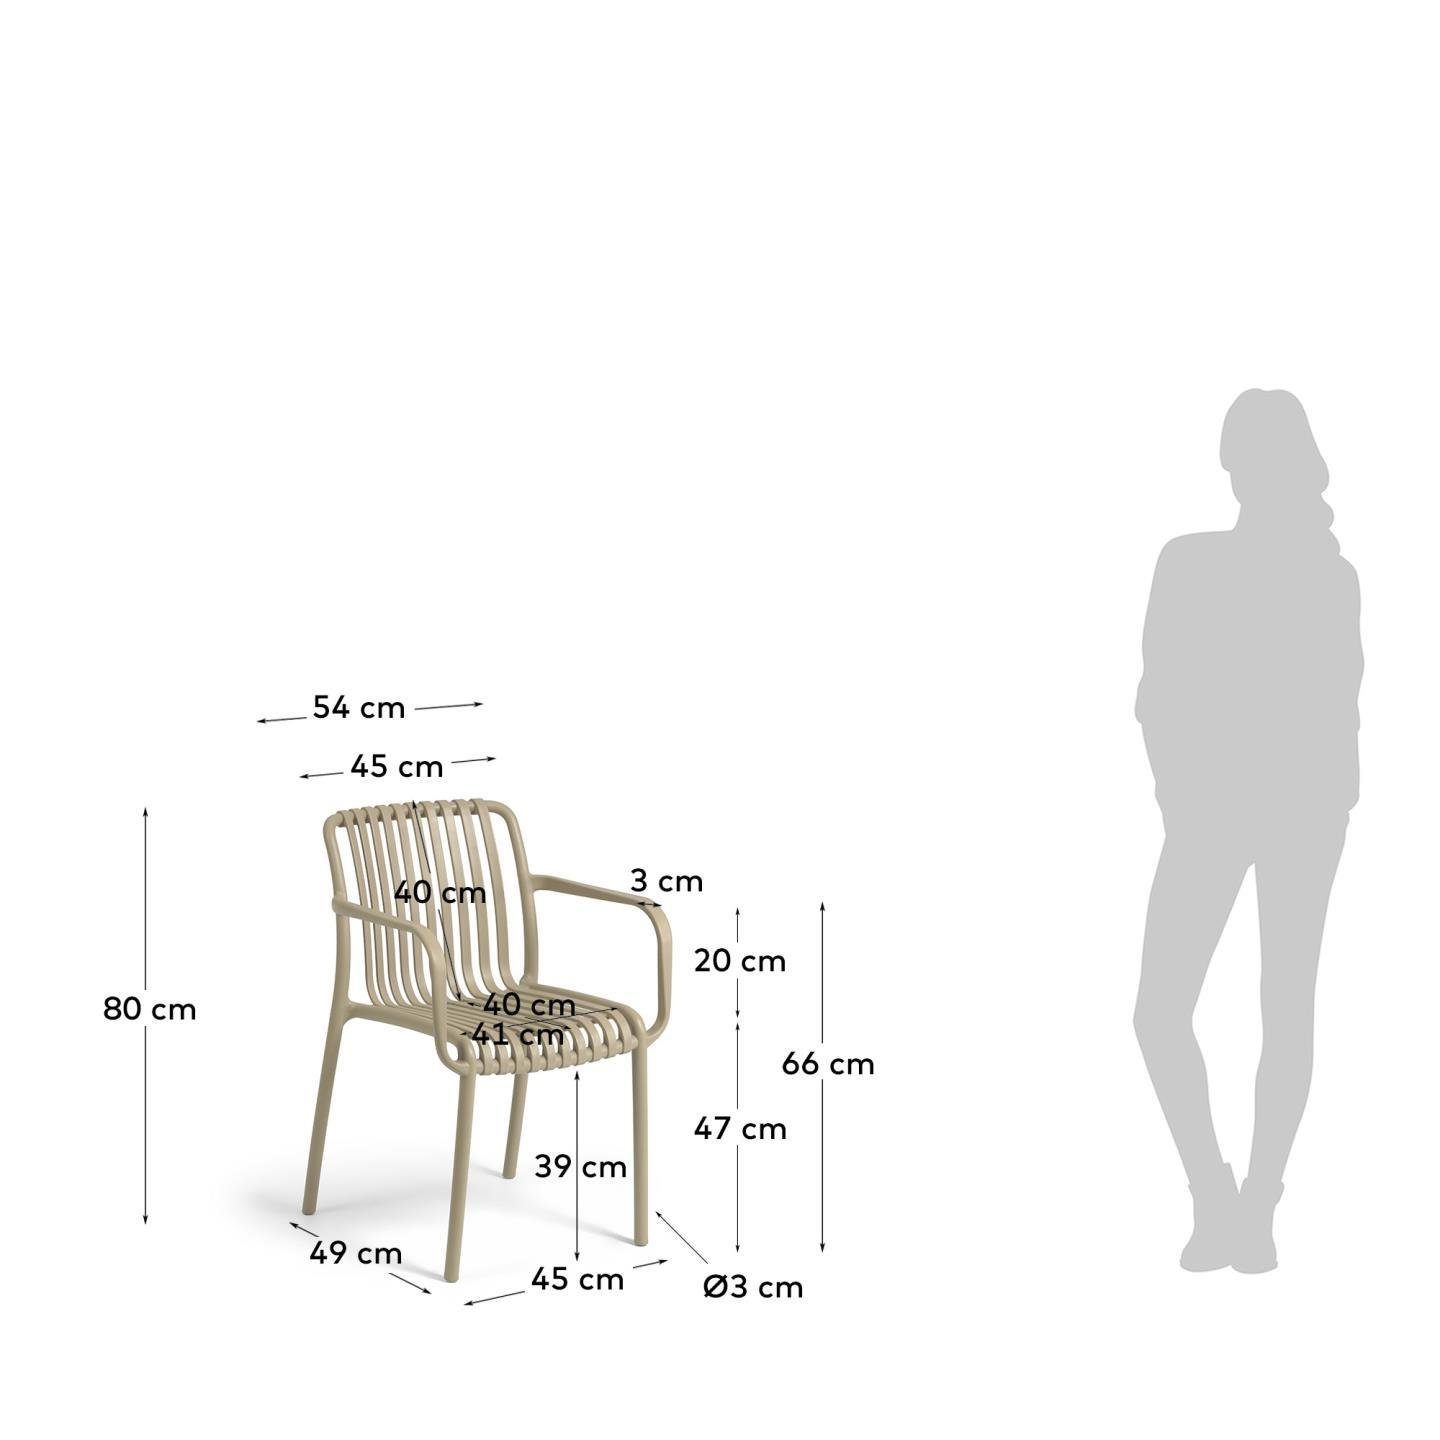 Isabellini x x 49 cm Outdoor-Stuhl 54 4er in beige 80 Set Gartenstuhl Natur24